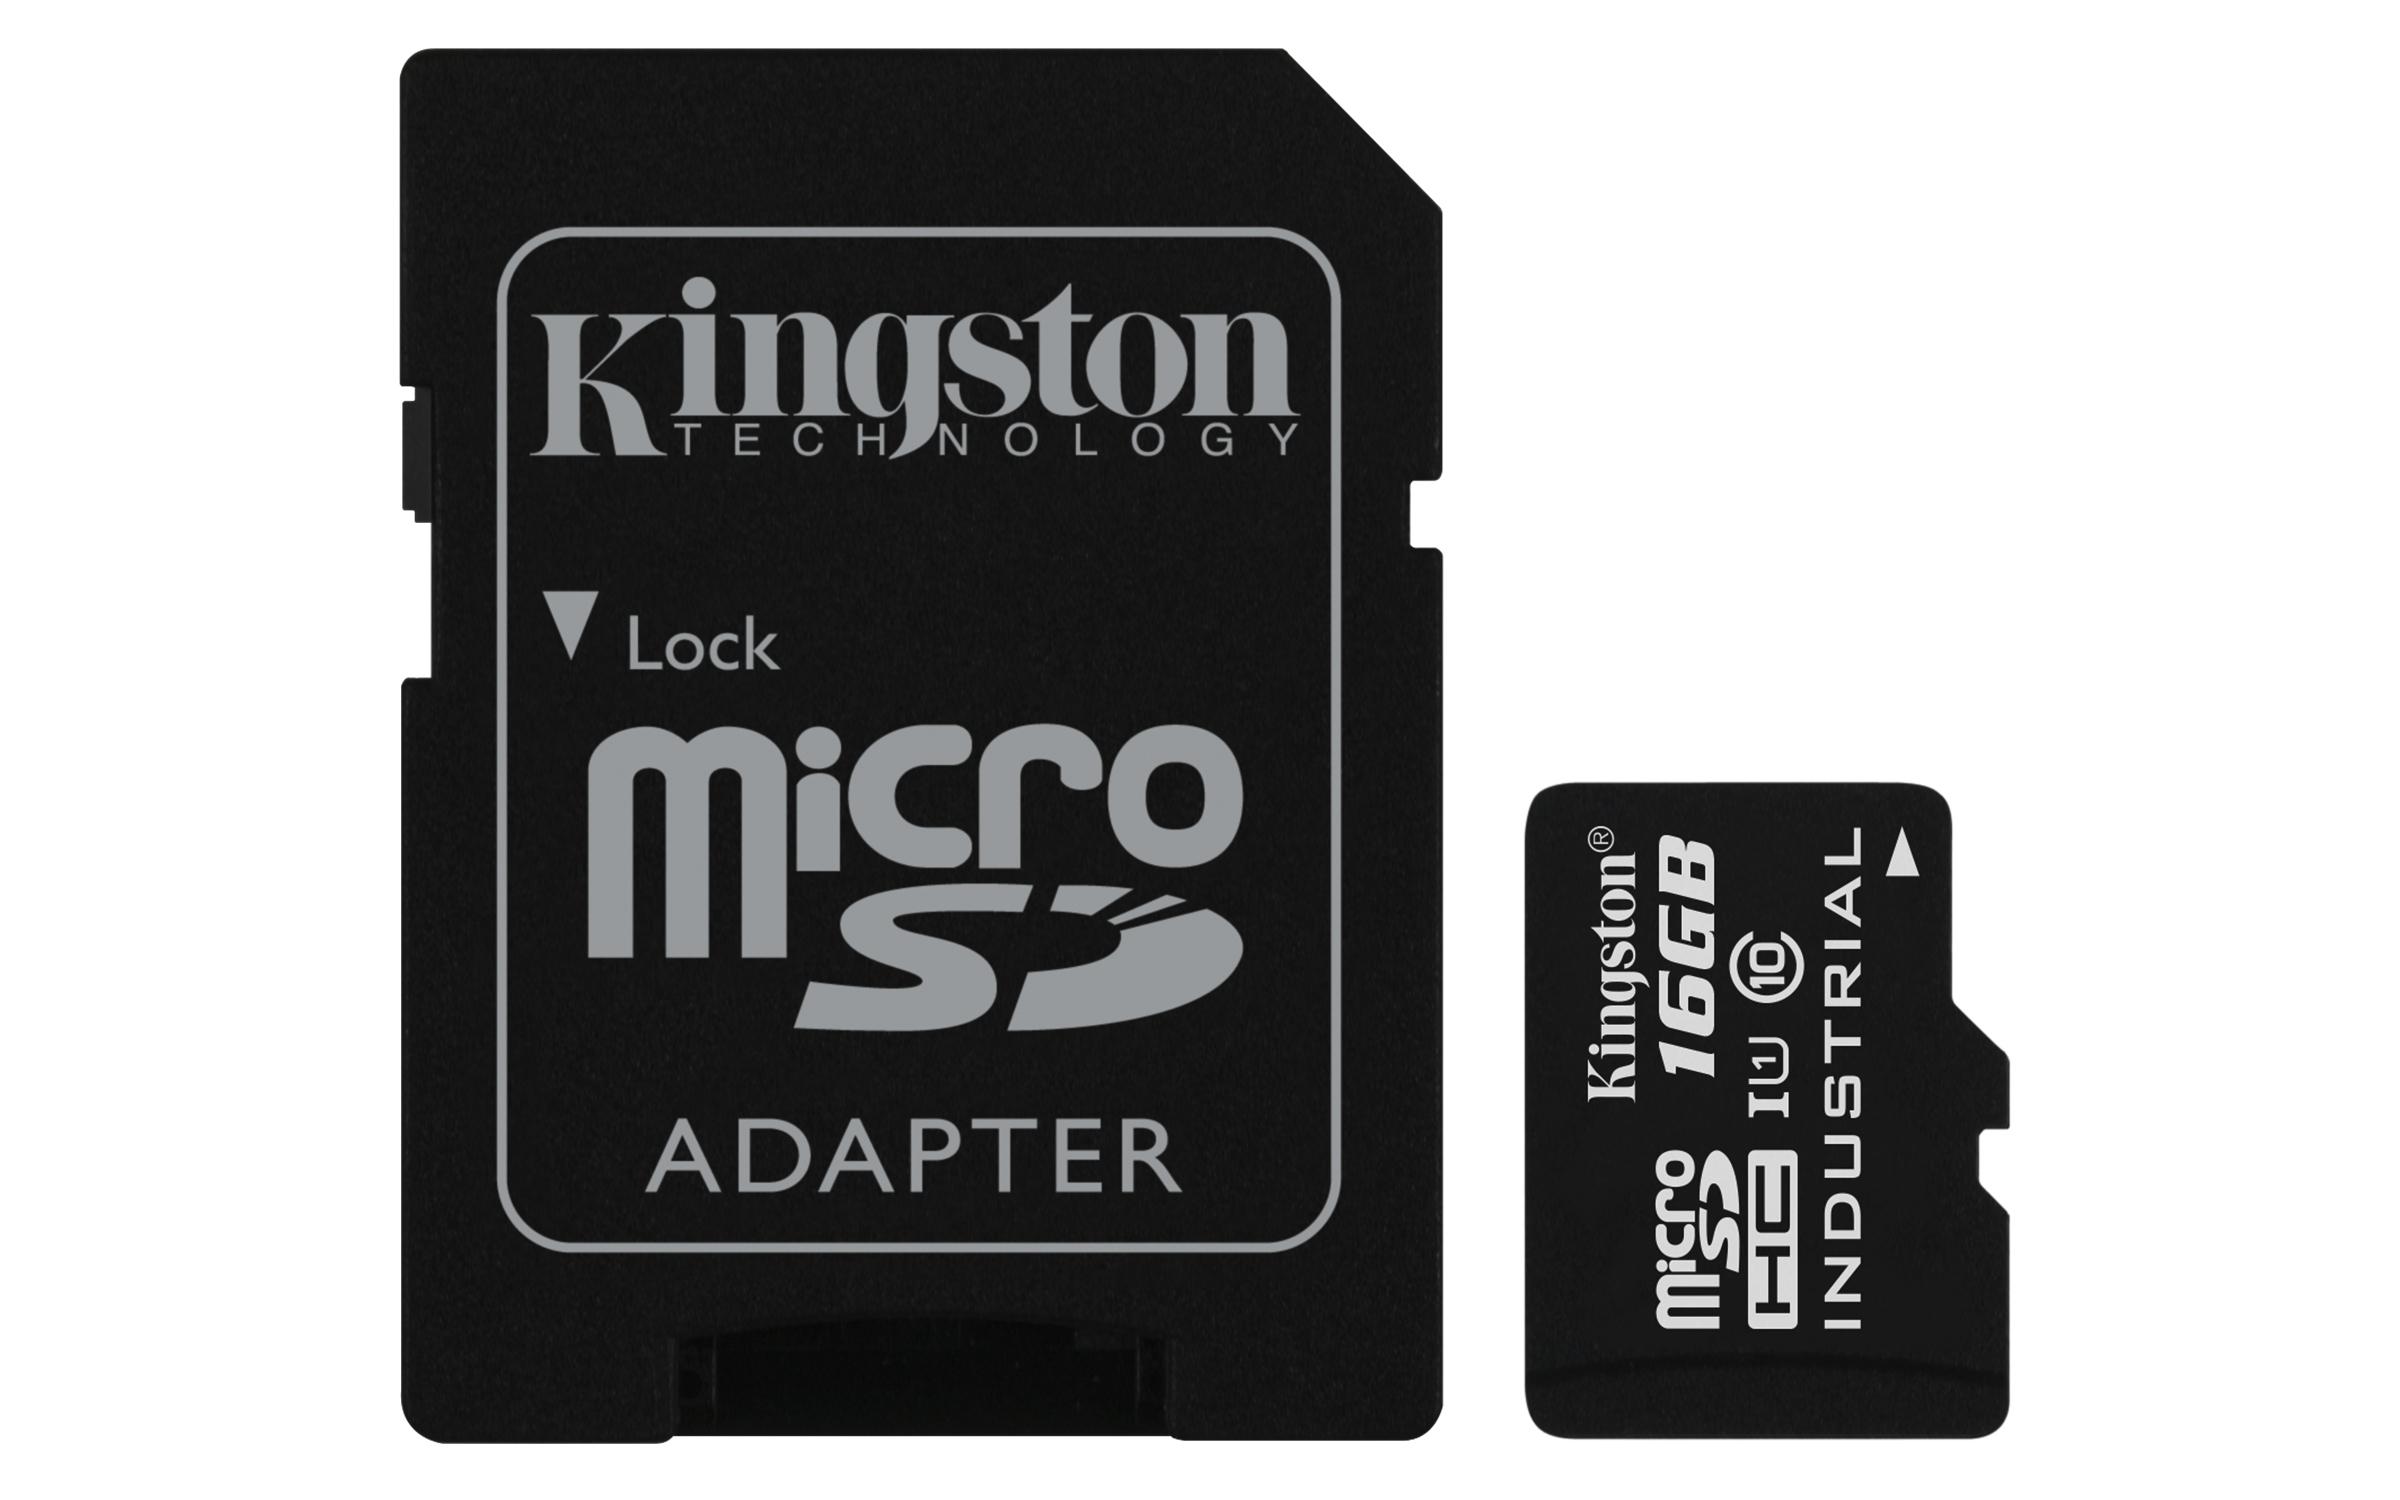 Card de memorie Kingston UHS-I Industrial Temp Micro SDHC 16GB Class 10 Adapter title=Card de memorie Kingston UHS-I Industrial Temp Micro SDHC 16GB Class 10 Adapter